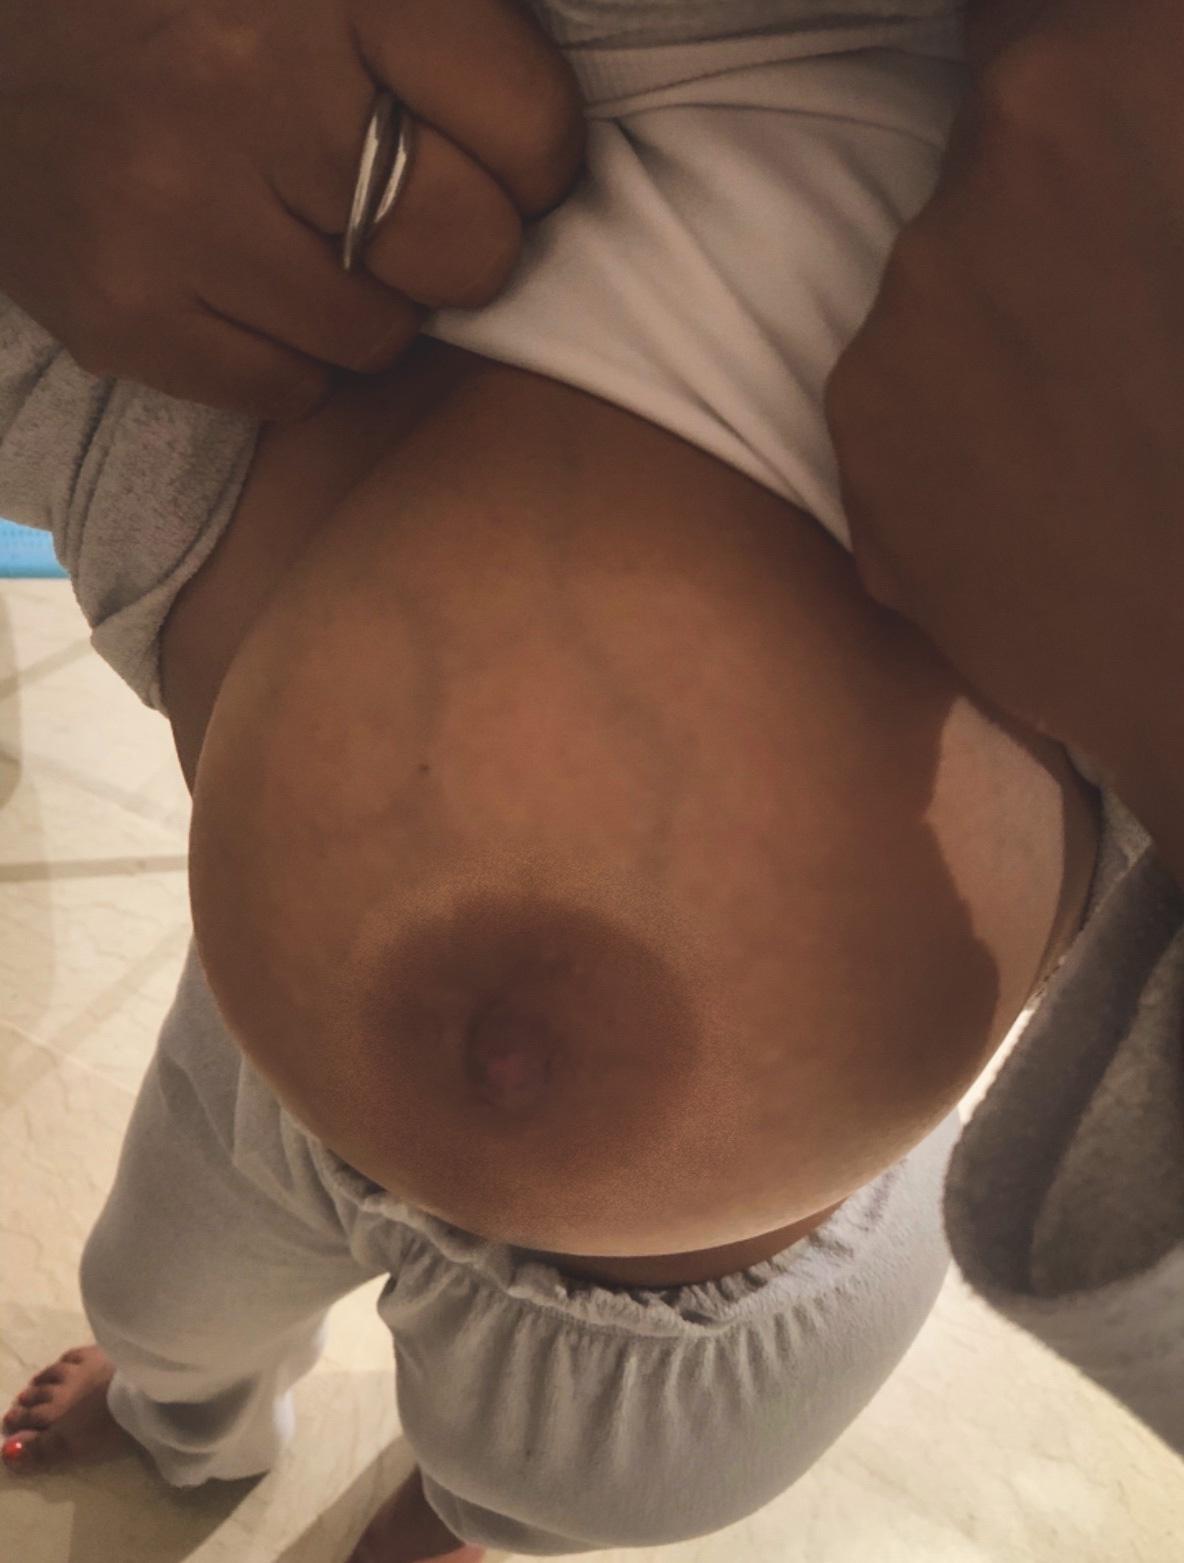 Big Veiny Boobs - 40 mom of 1, with big veiny breasts problem